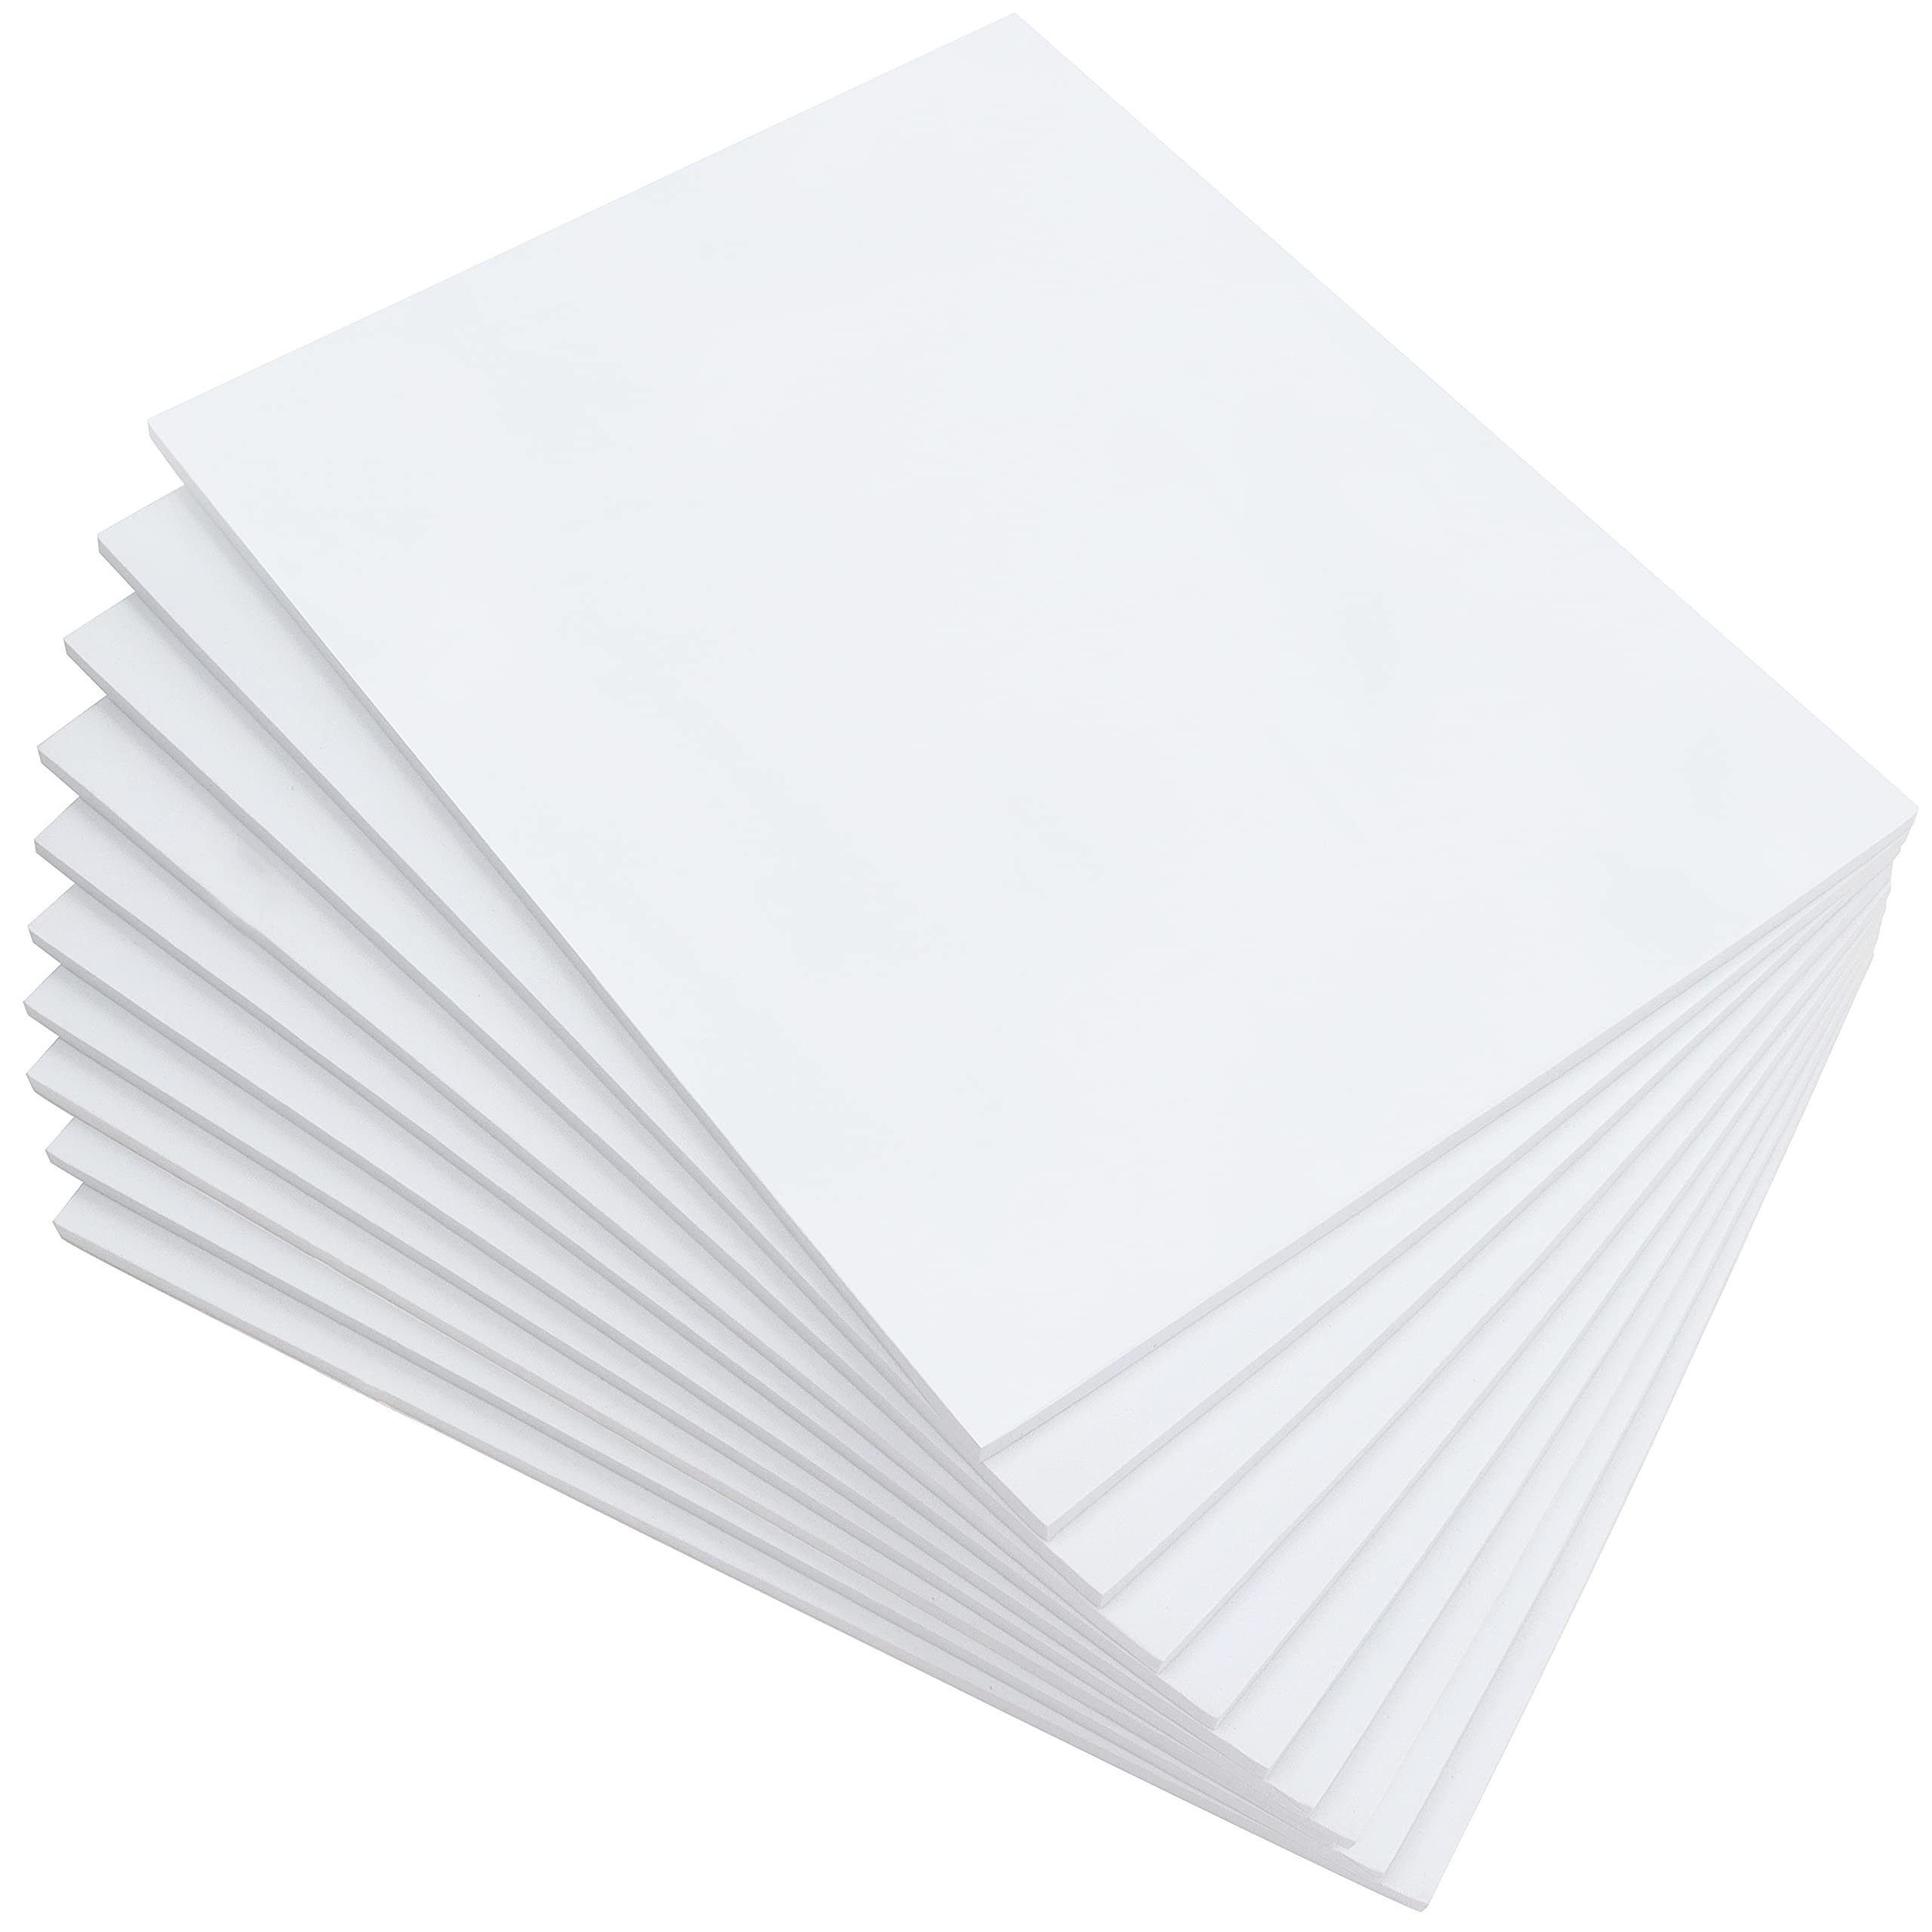 https://i.otto.de/i/otto/f634378e-b295-5bf1-ab04-07ee5dbcbb32/belle-vous-aquarellpapier-eva-schaumstoffplatten-10er-pack-30x23-cm-6-mm-dicke-white-eva-foam-sheets-10-pack-30x23-cm-6-mm-thickness.jpg?$formatz$